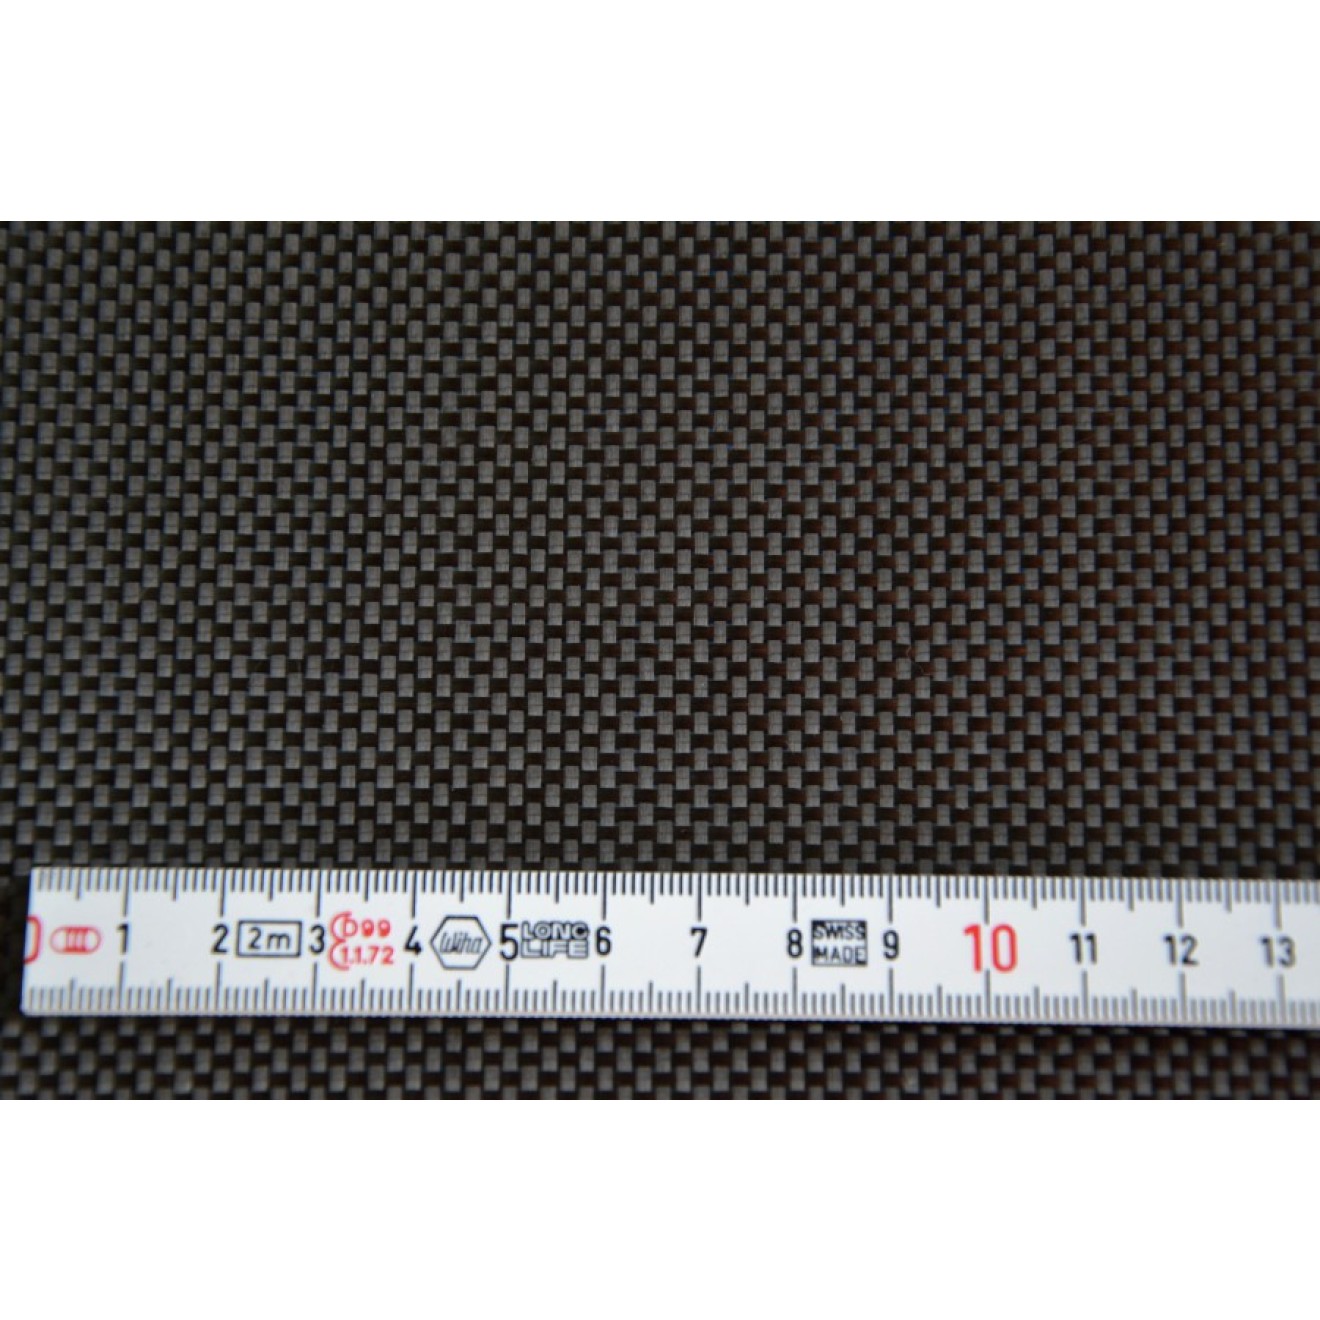 Woven carbon fiber fabric 3K 200g/m² plain weave Aero